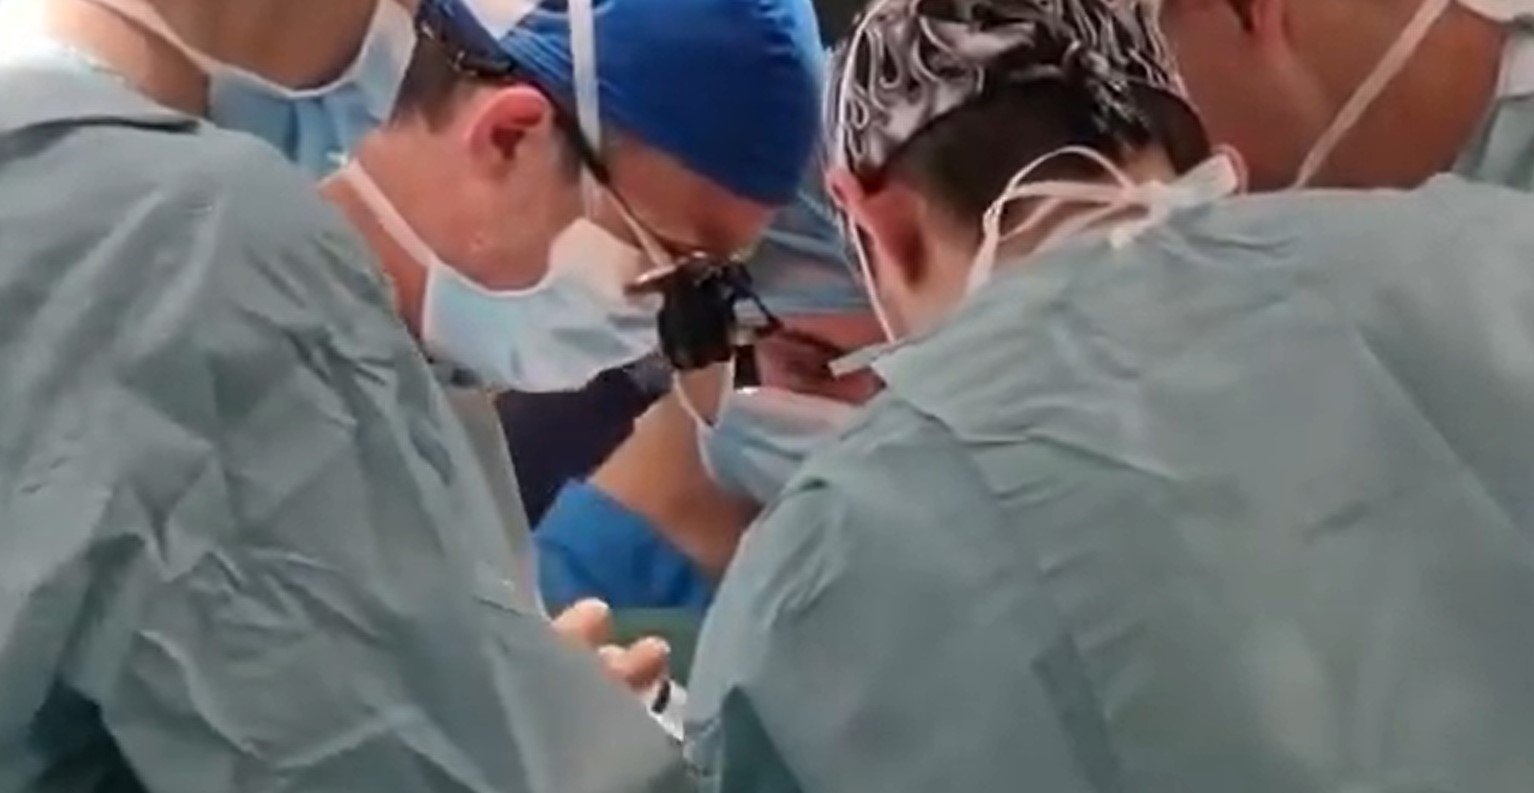  VIDEO – Prima implantare a unei inimi artificiale la un copil din România